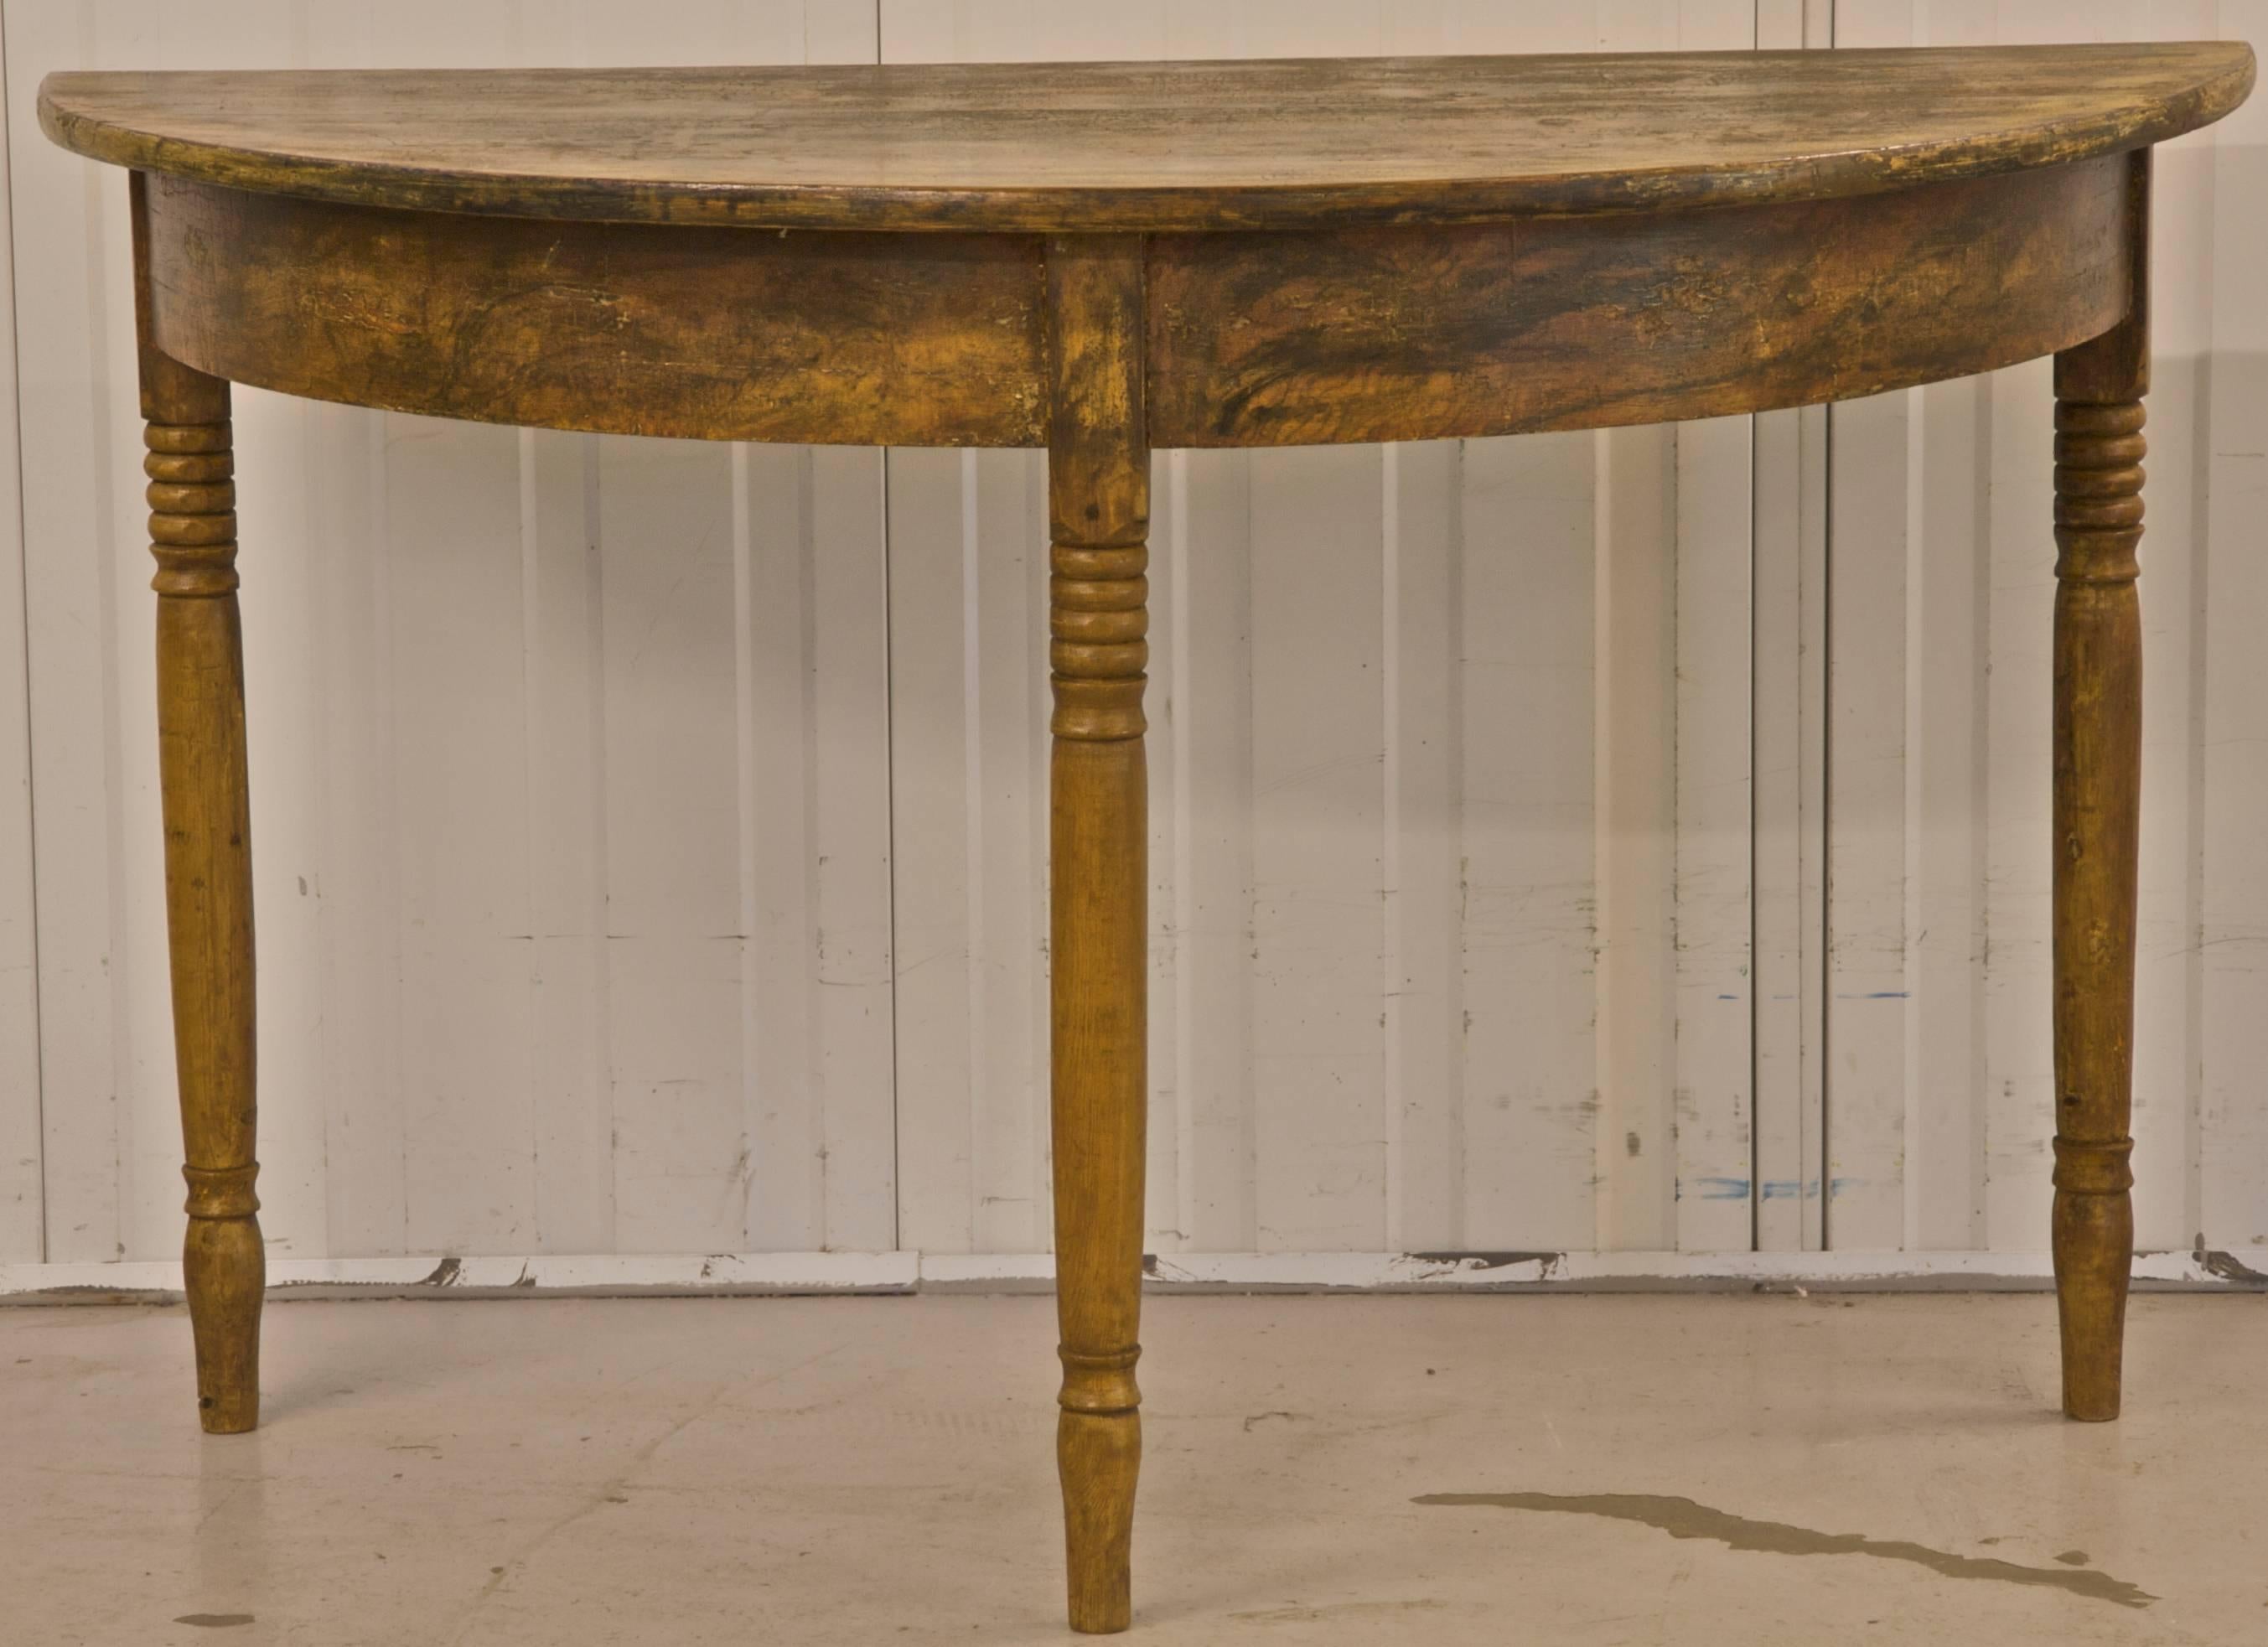 Polished Swedish Gustavian Demilune Tables 1800s Faux Wood Grain Folk Art Gustavian For Sale